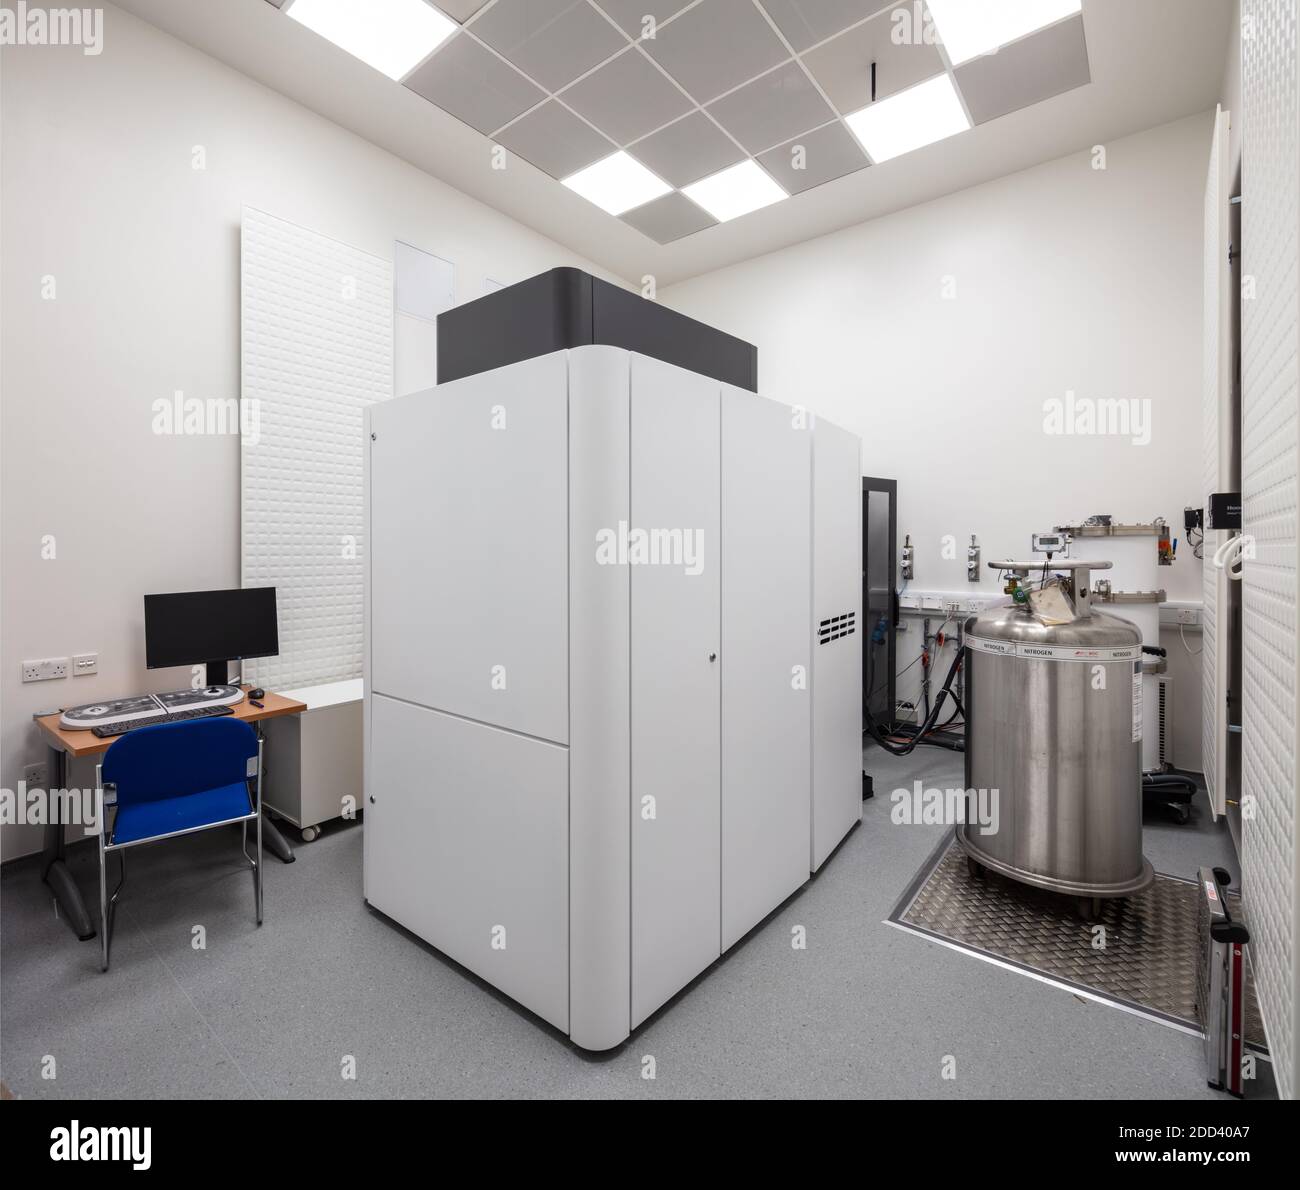 CTEM lab at the National Physical Laboratory in Teddington, London, England. Stock Photo